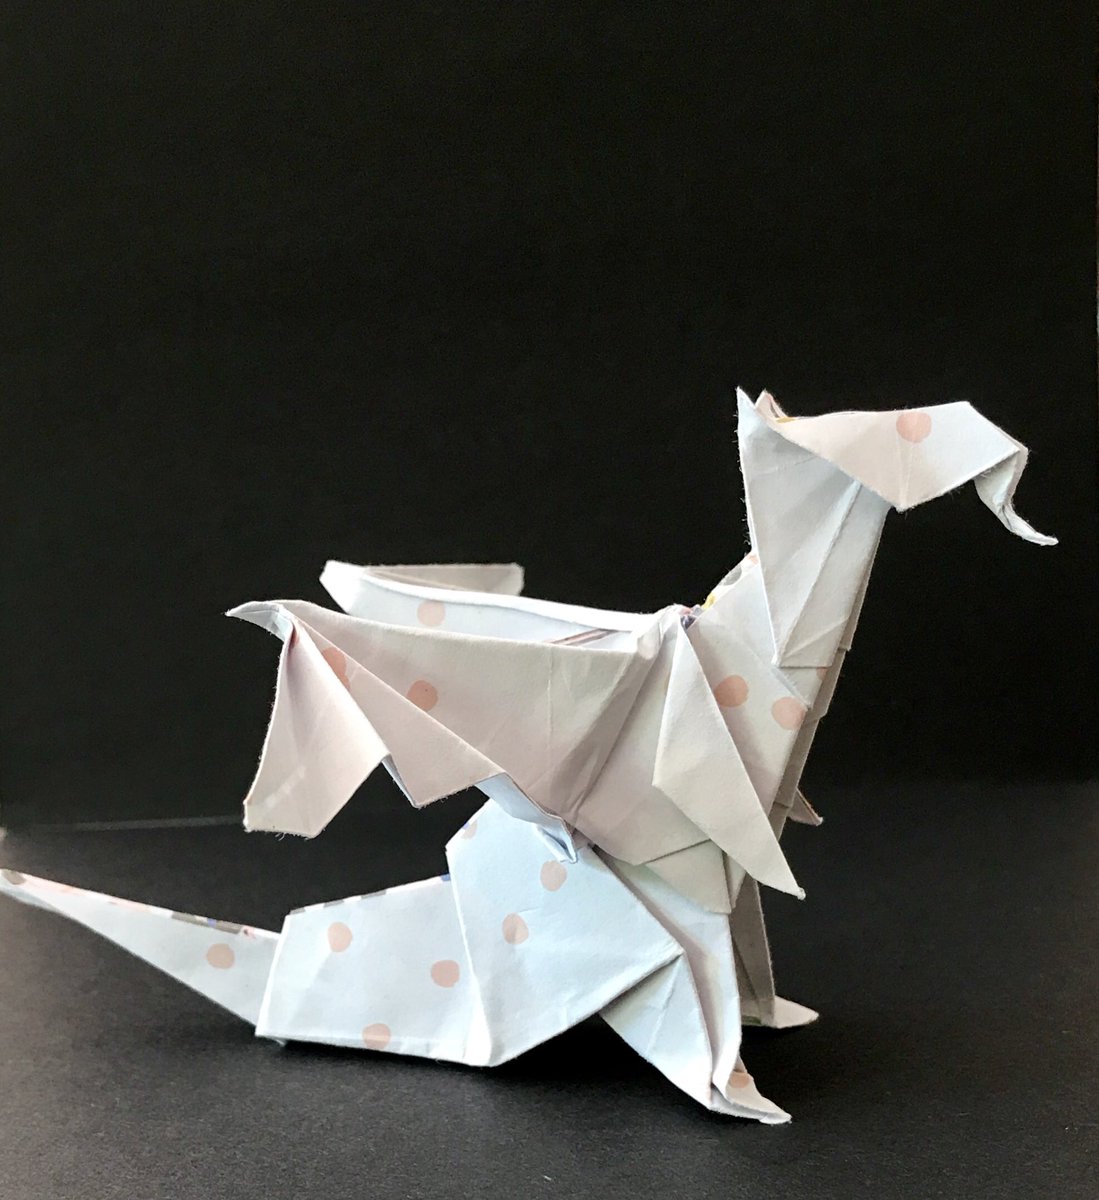 Jule Boom On Twitter Origami Origamidragon Dragons By Jo